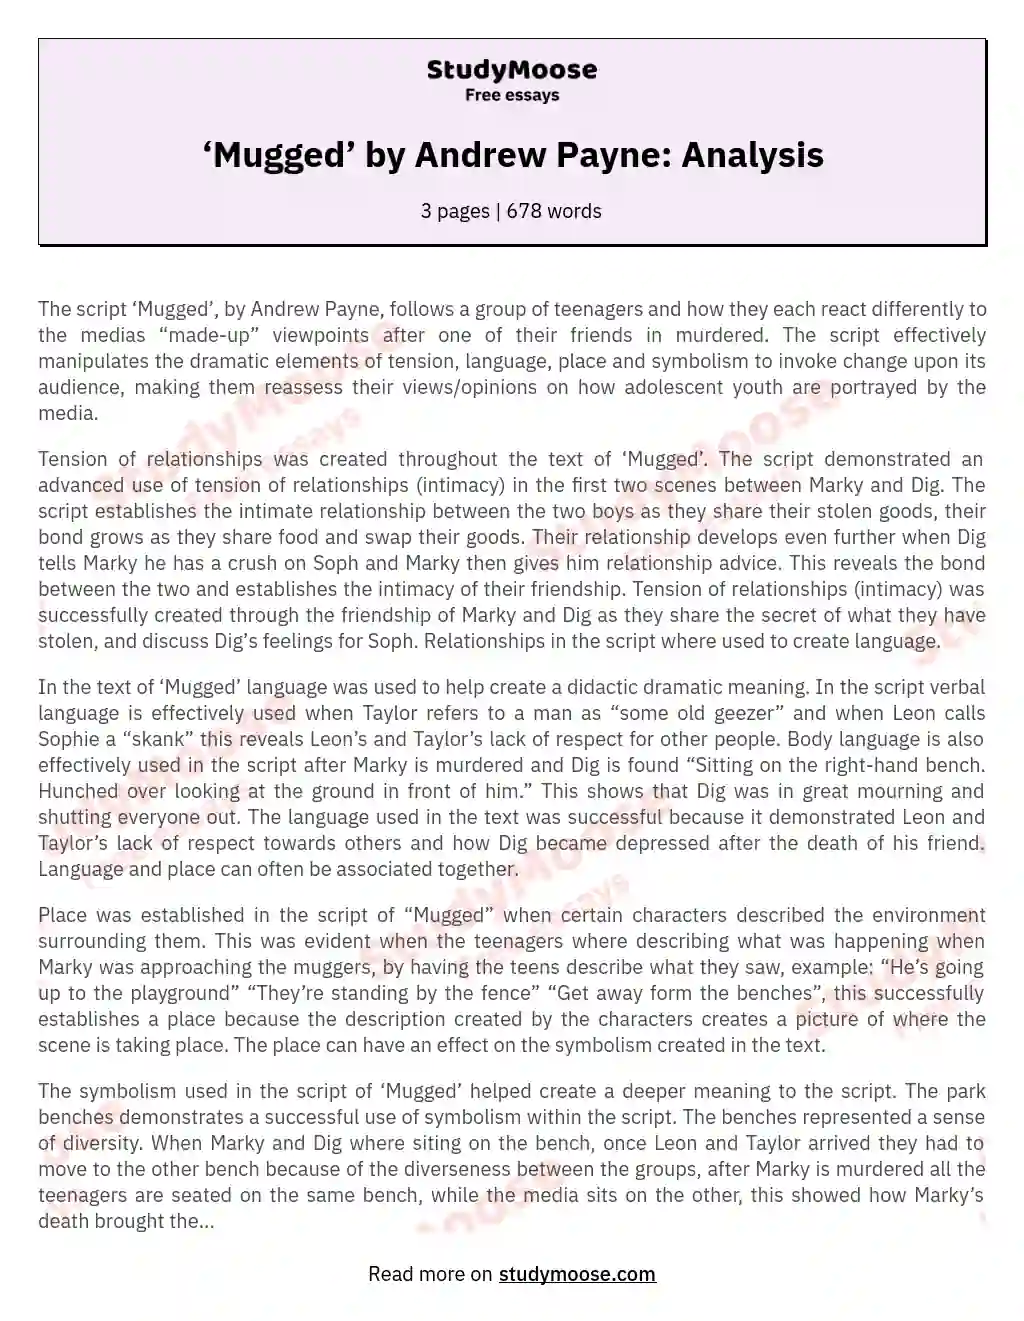 ‘Mugged’ by Andrew Payne: Analysis essay